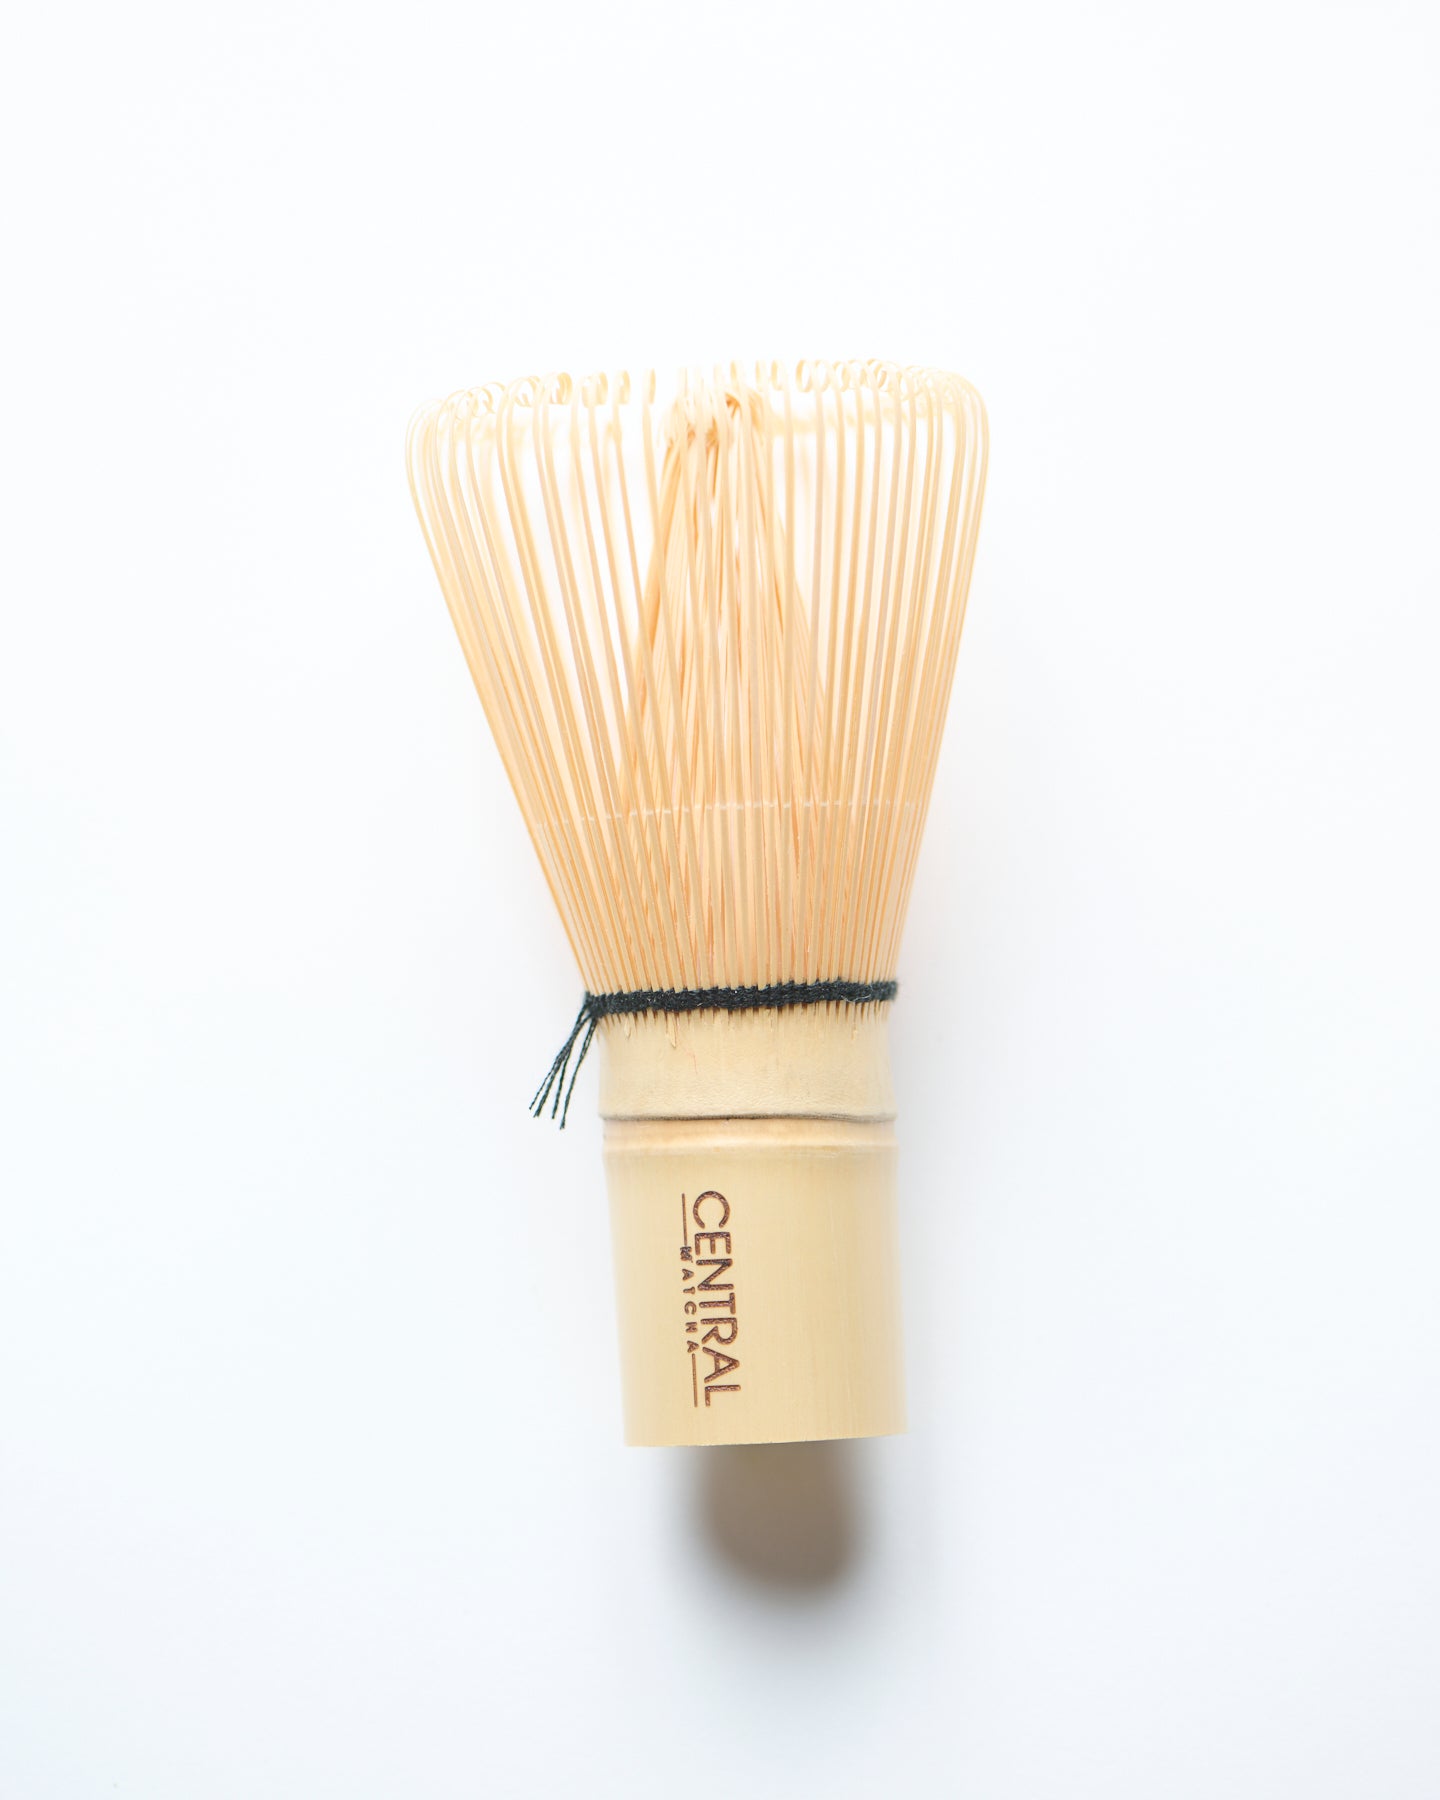 Bamboo Matcha Whisk (Chasen) – Central Matcha